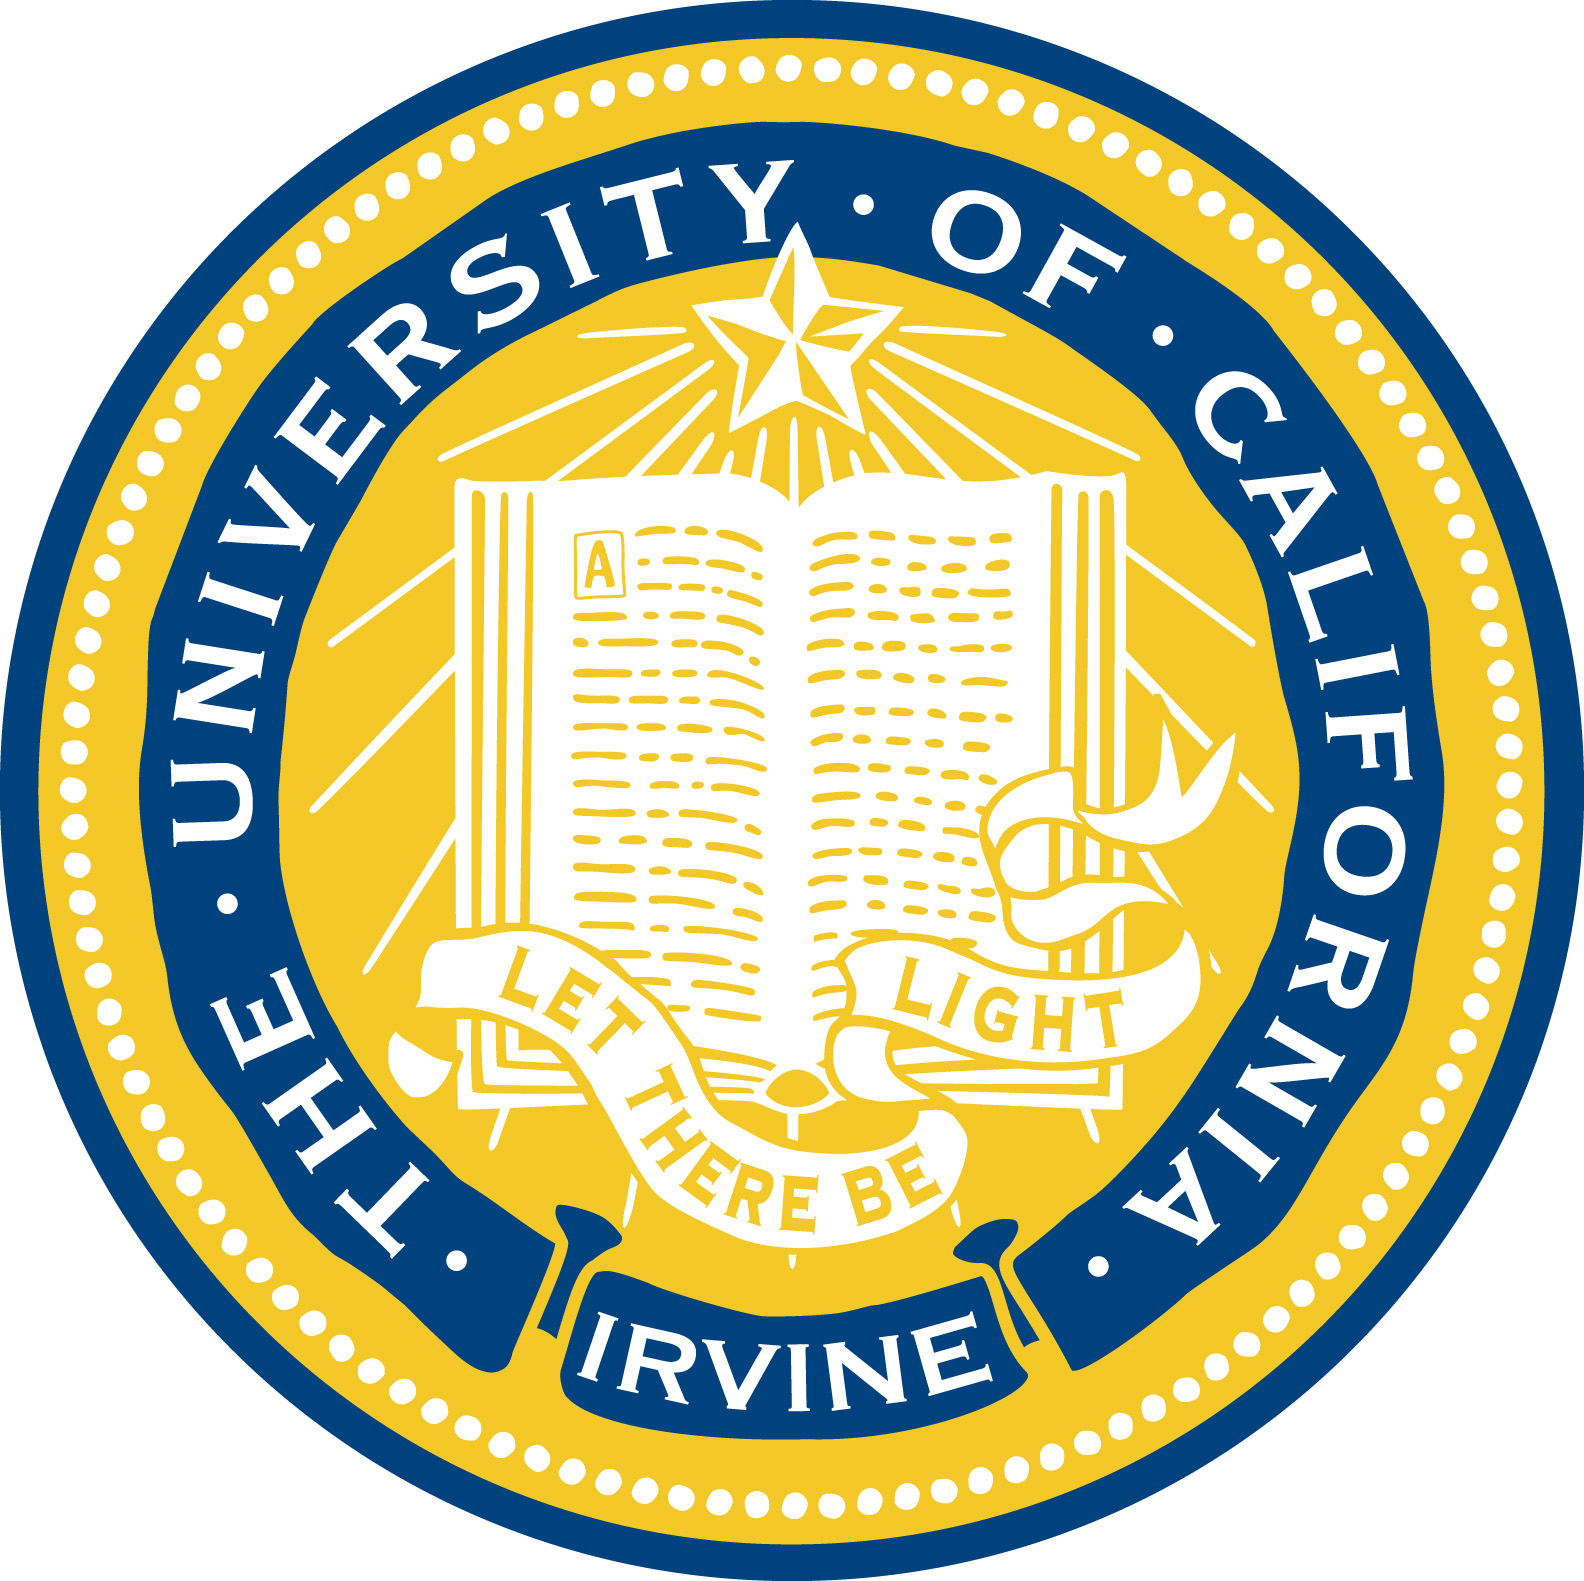 uc irvine medical center logo